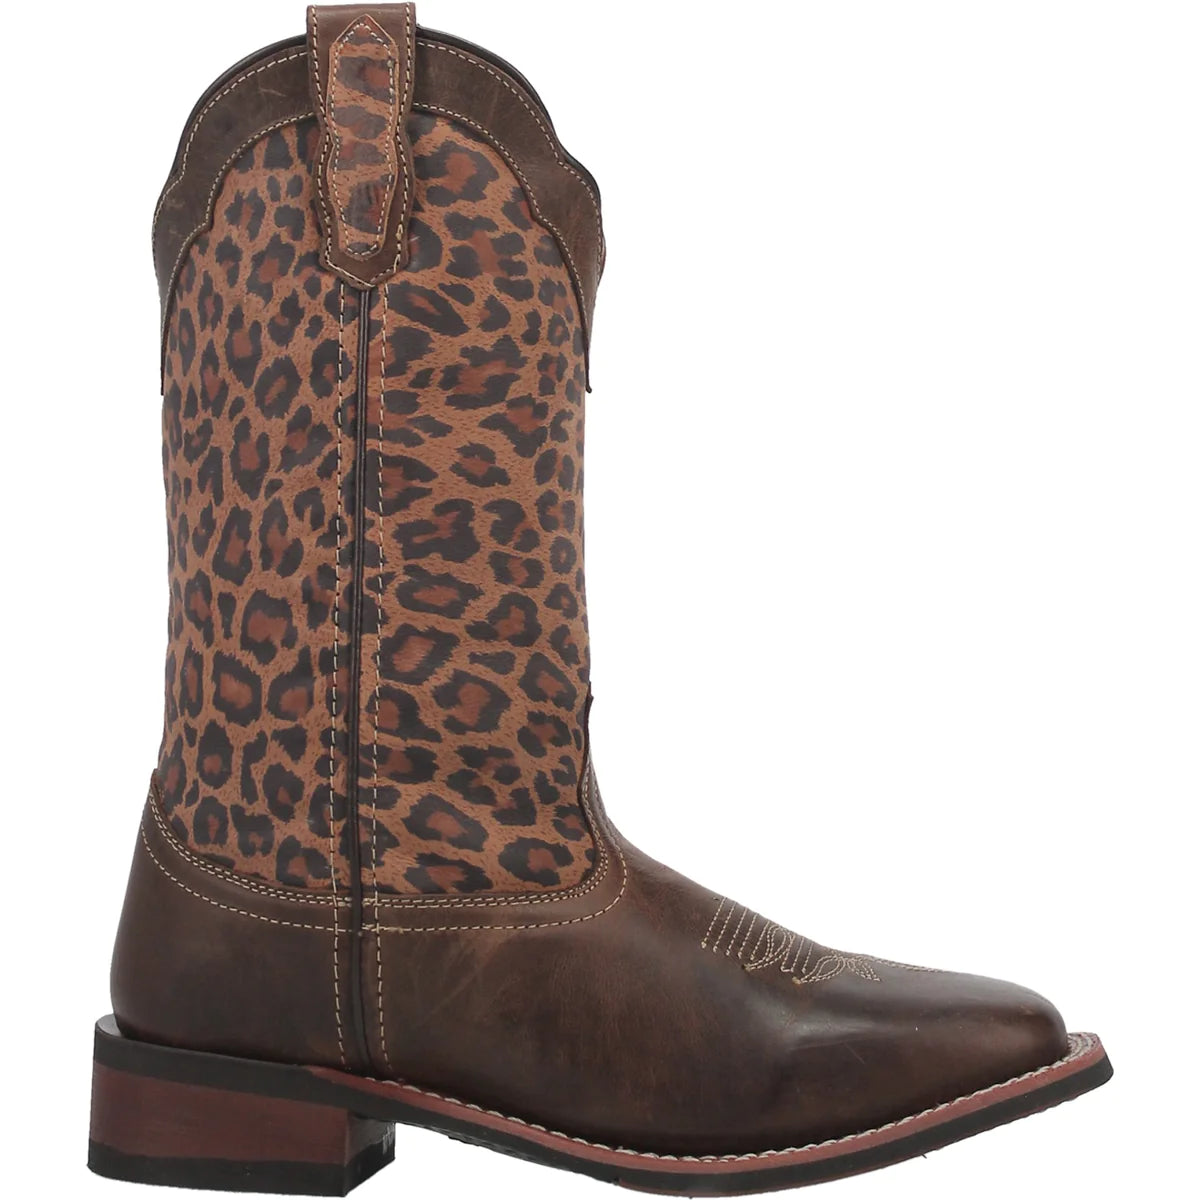 Laredo Women's Astras Leather Boot